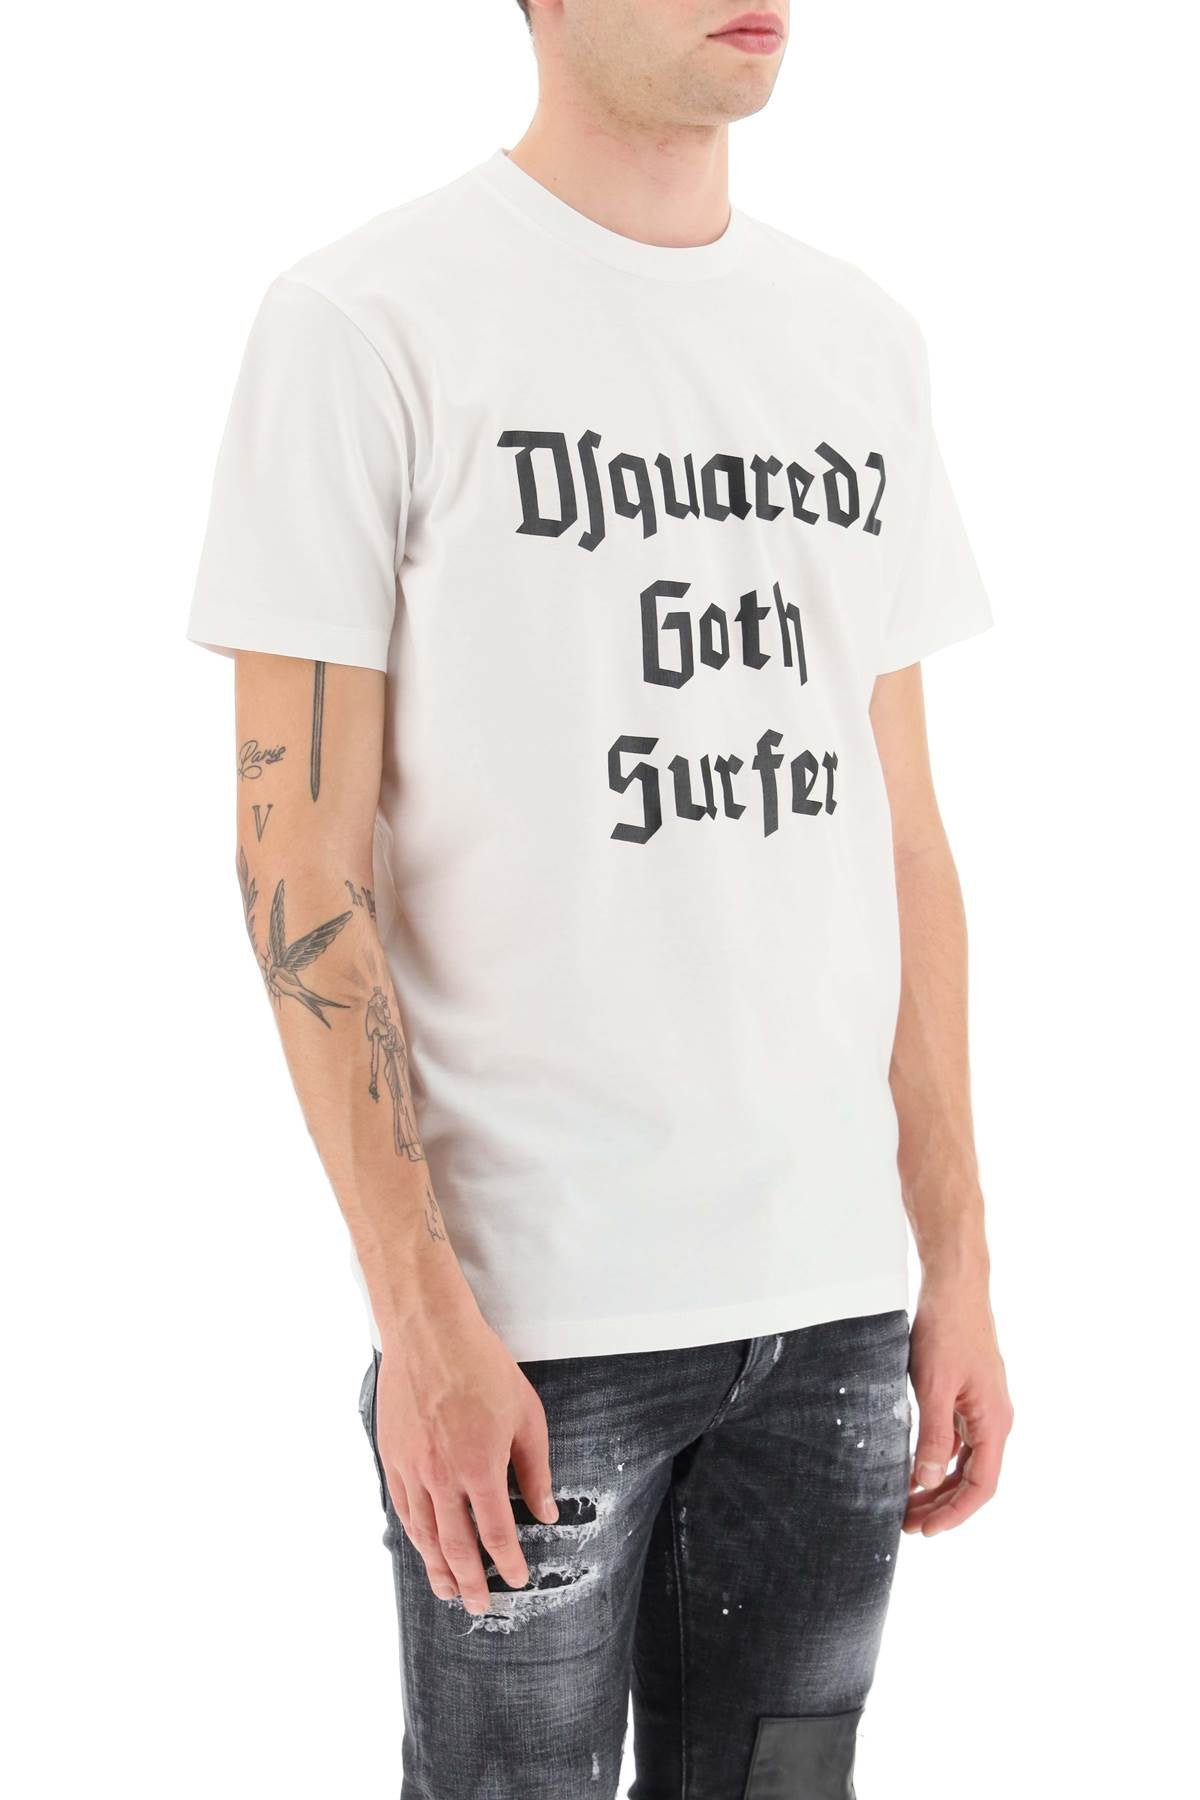 Dsquared2 'd2 goth surfer' t-shirt-1